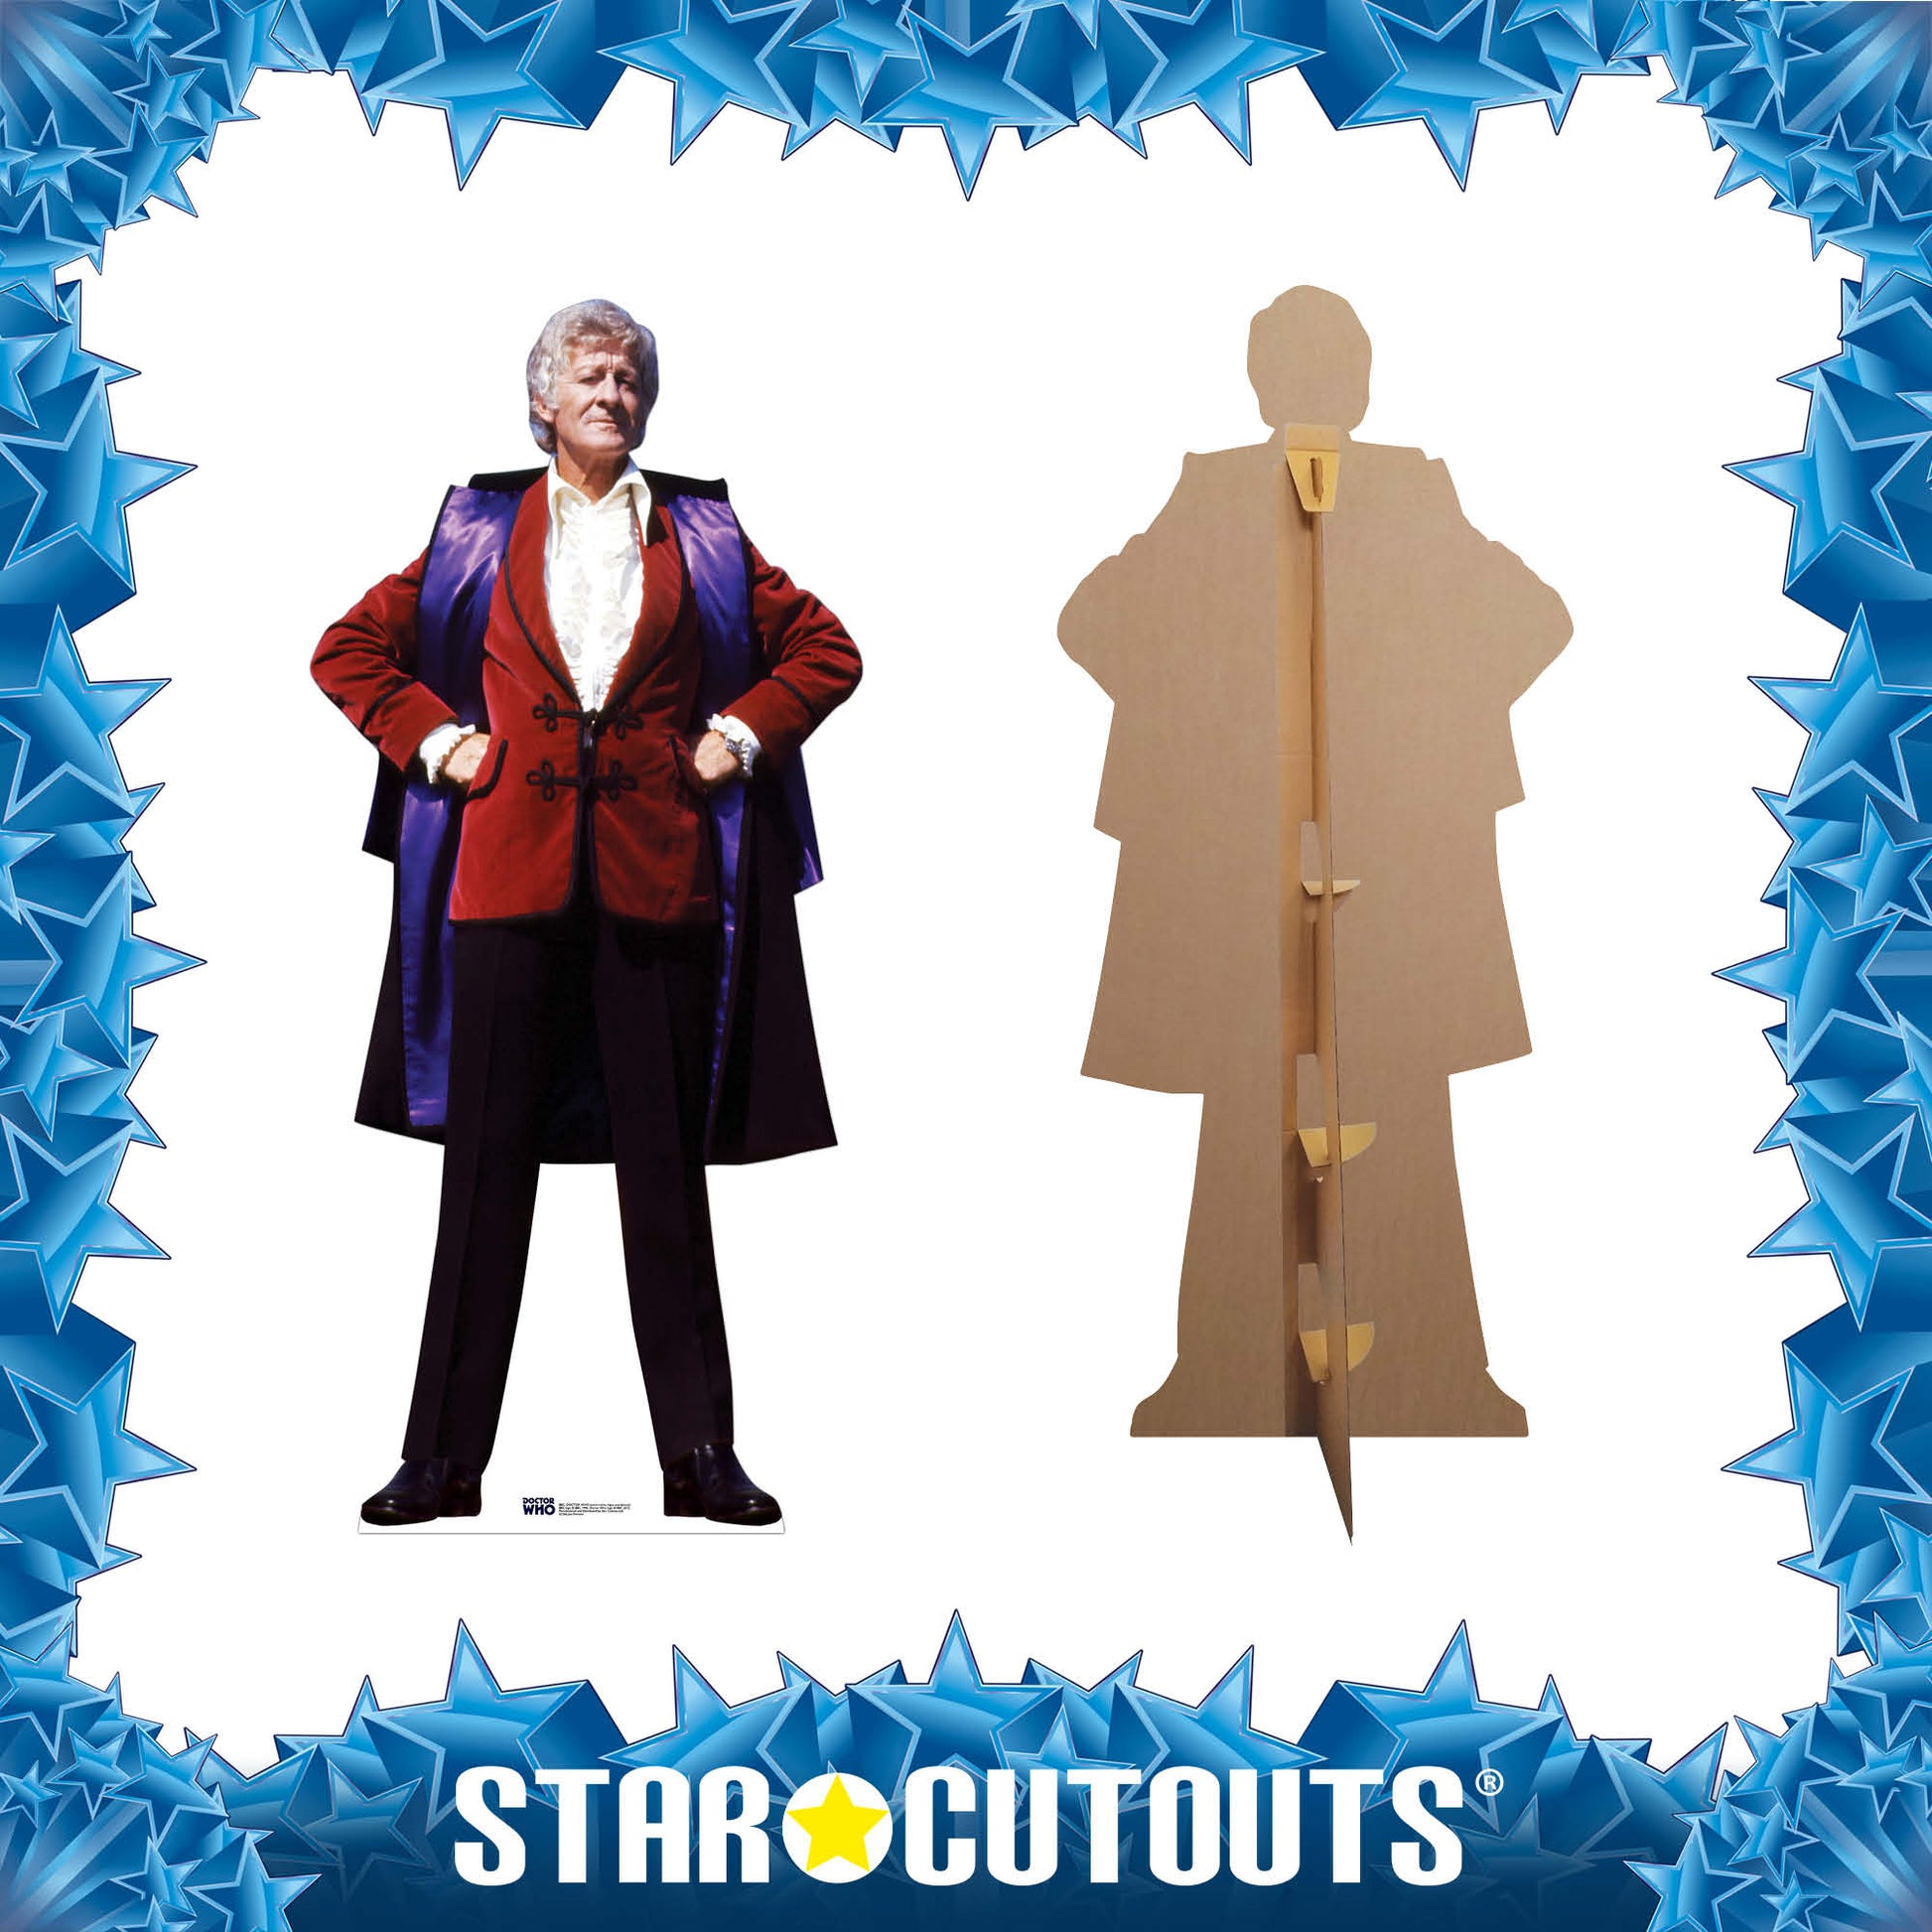 John Pertwee Cardboard Cut Out Height 189cm - Star Cutouts